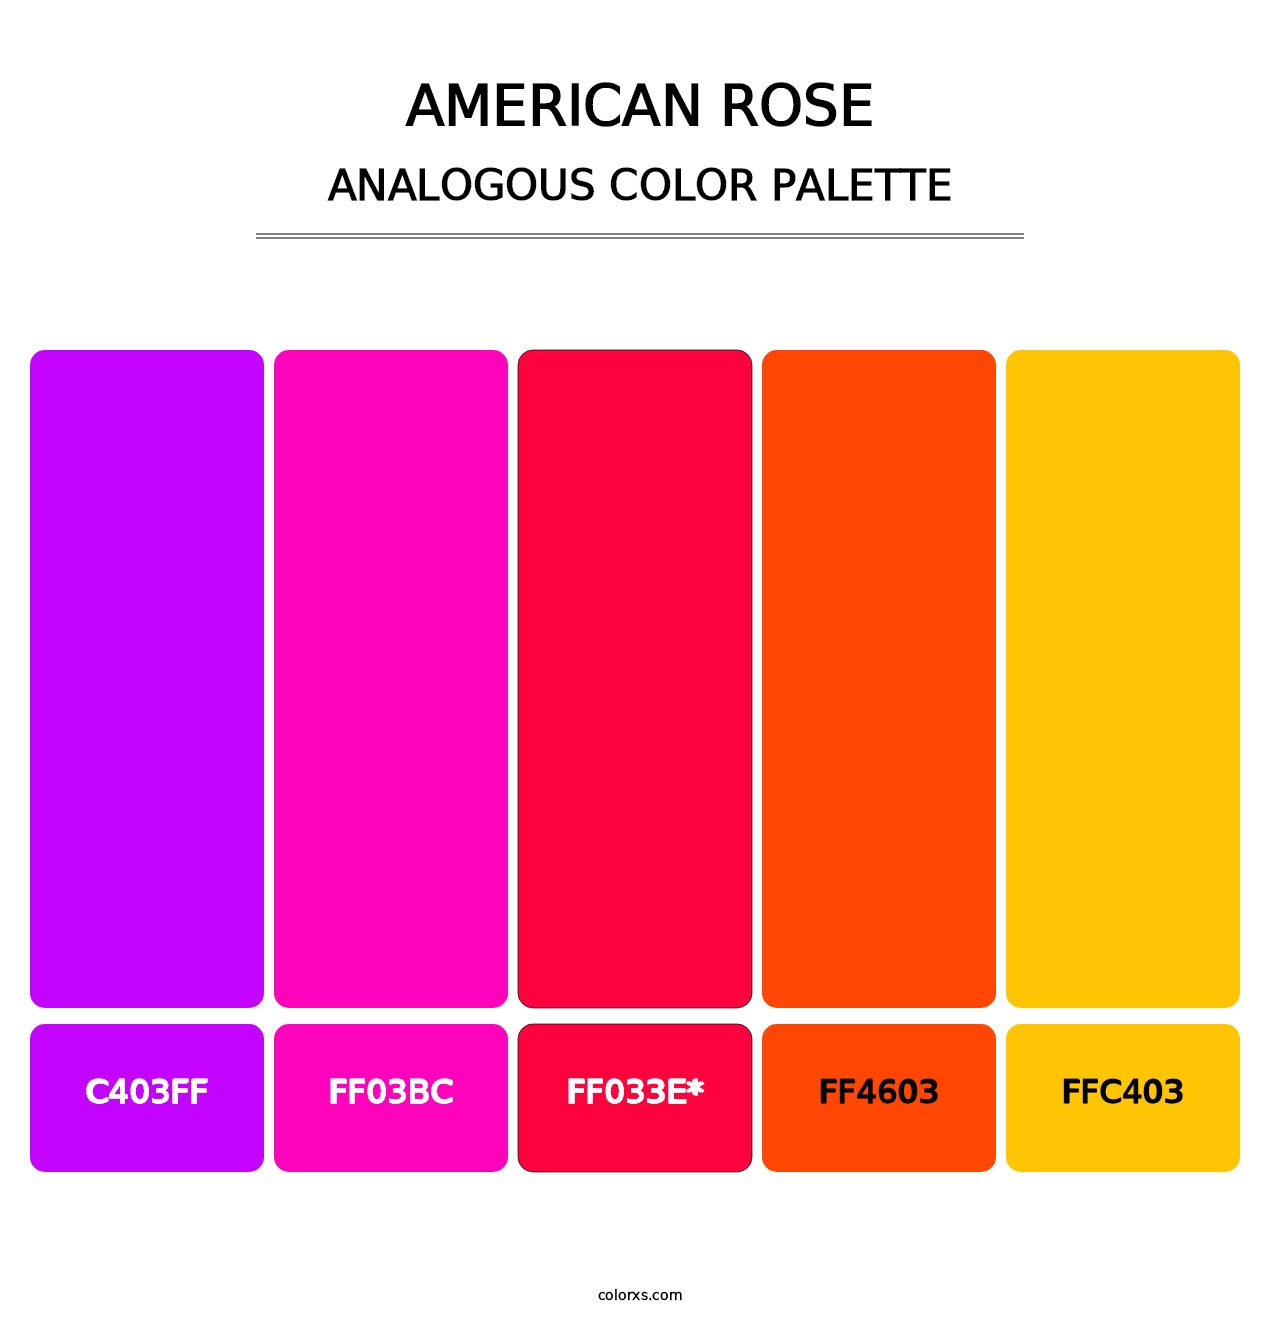 American Rose - Analogous Color Palette